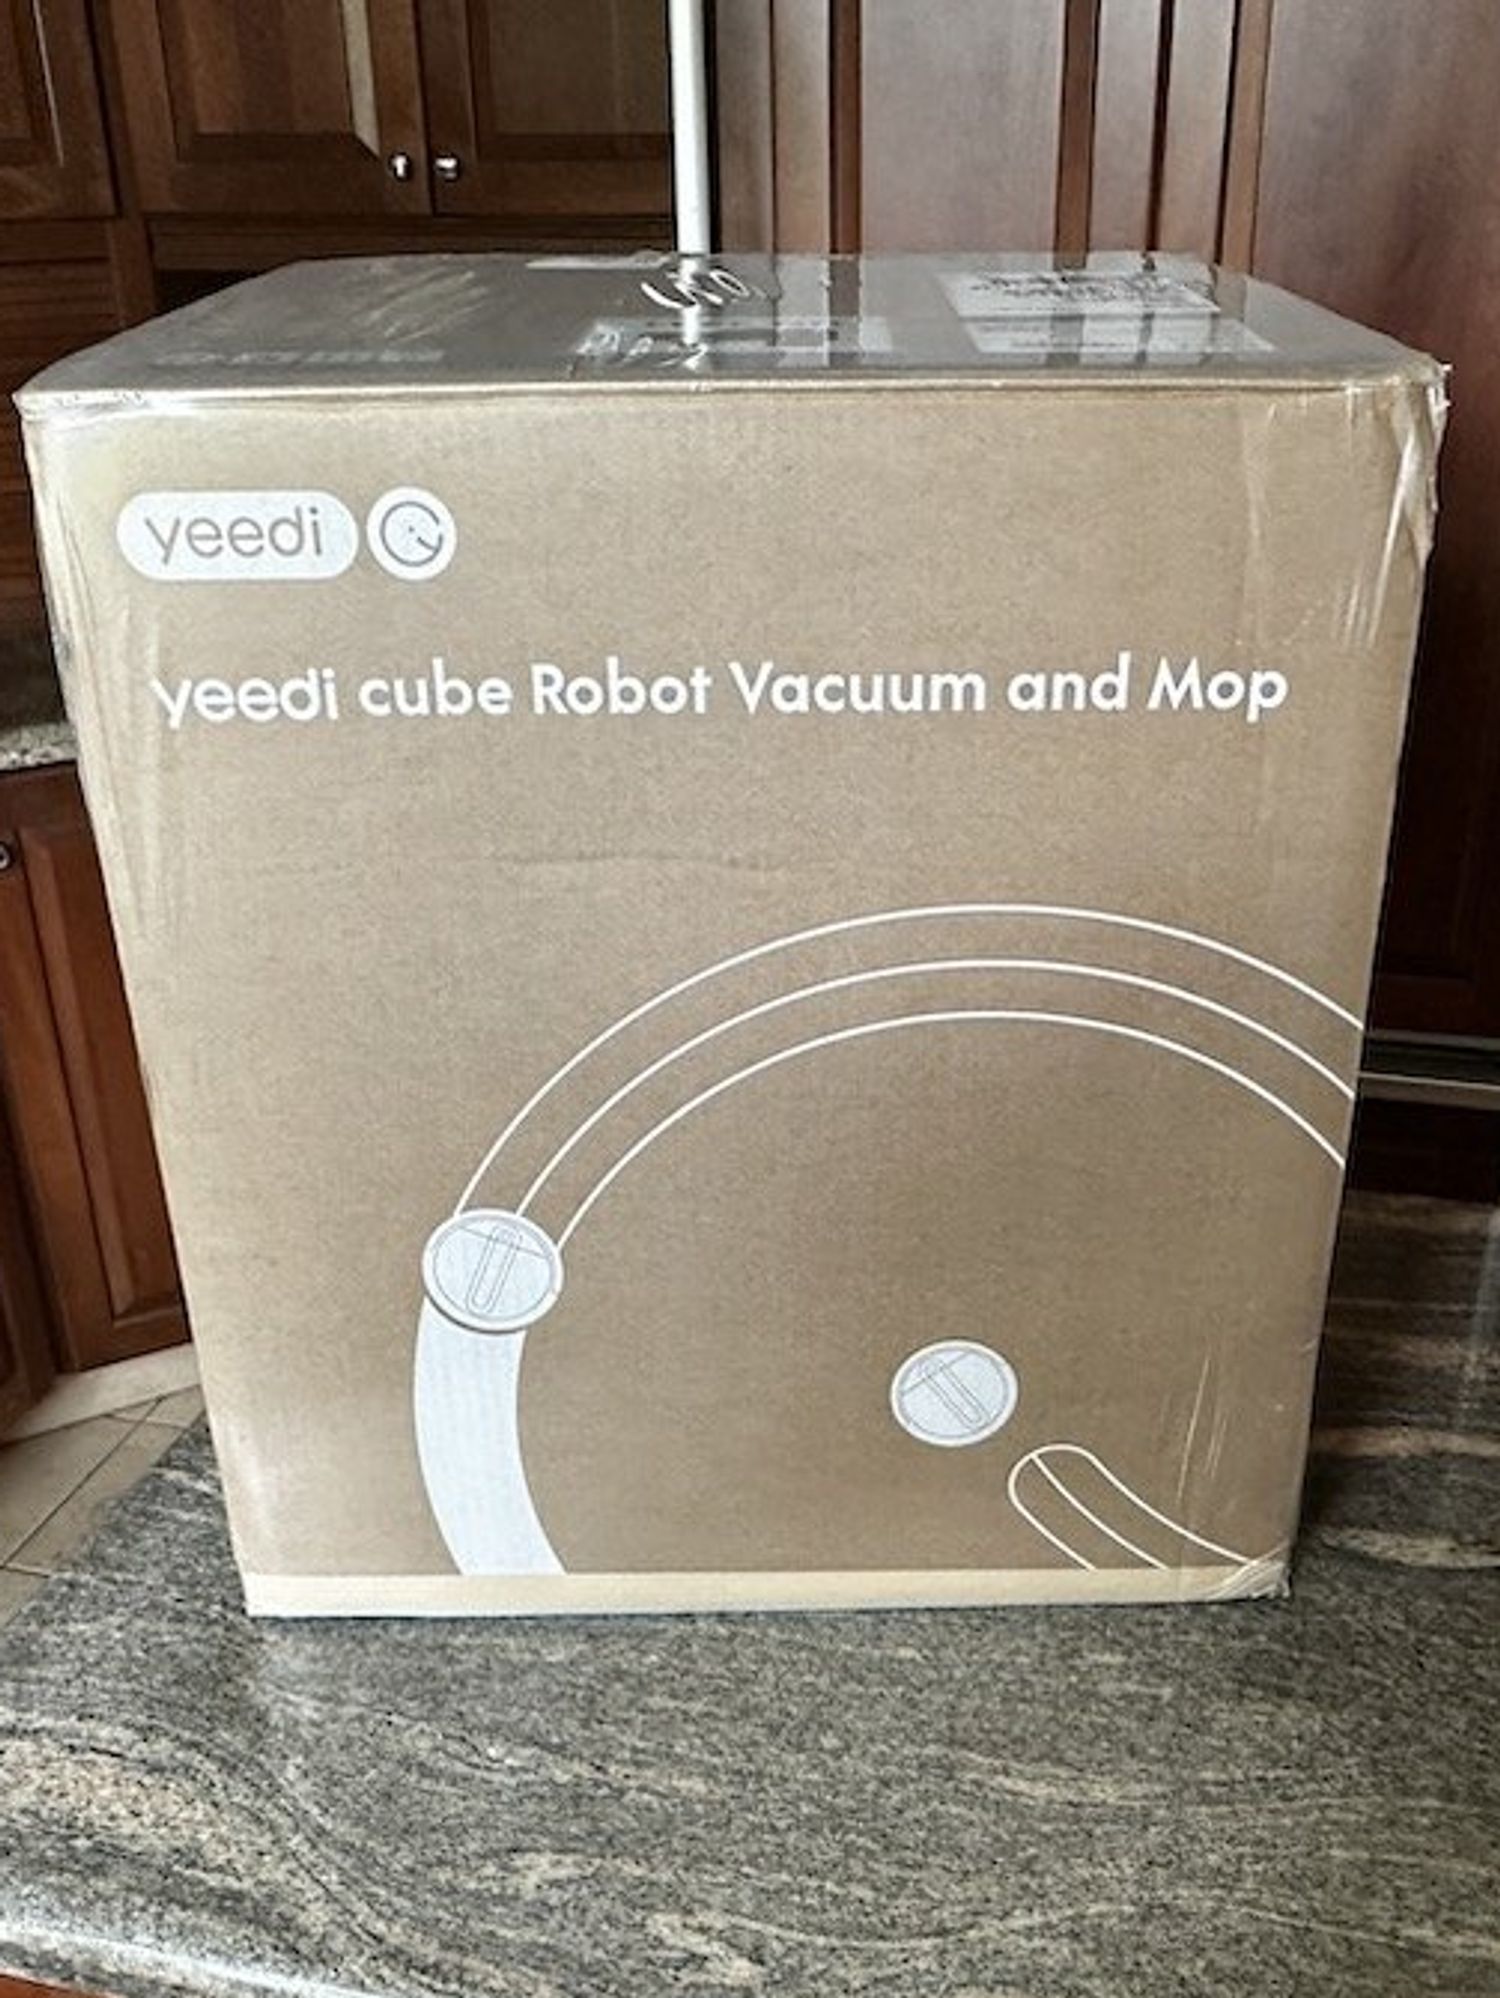 a photo of yeedi cube robot vacuum and mop box